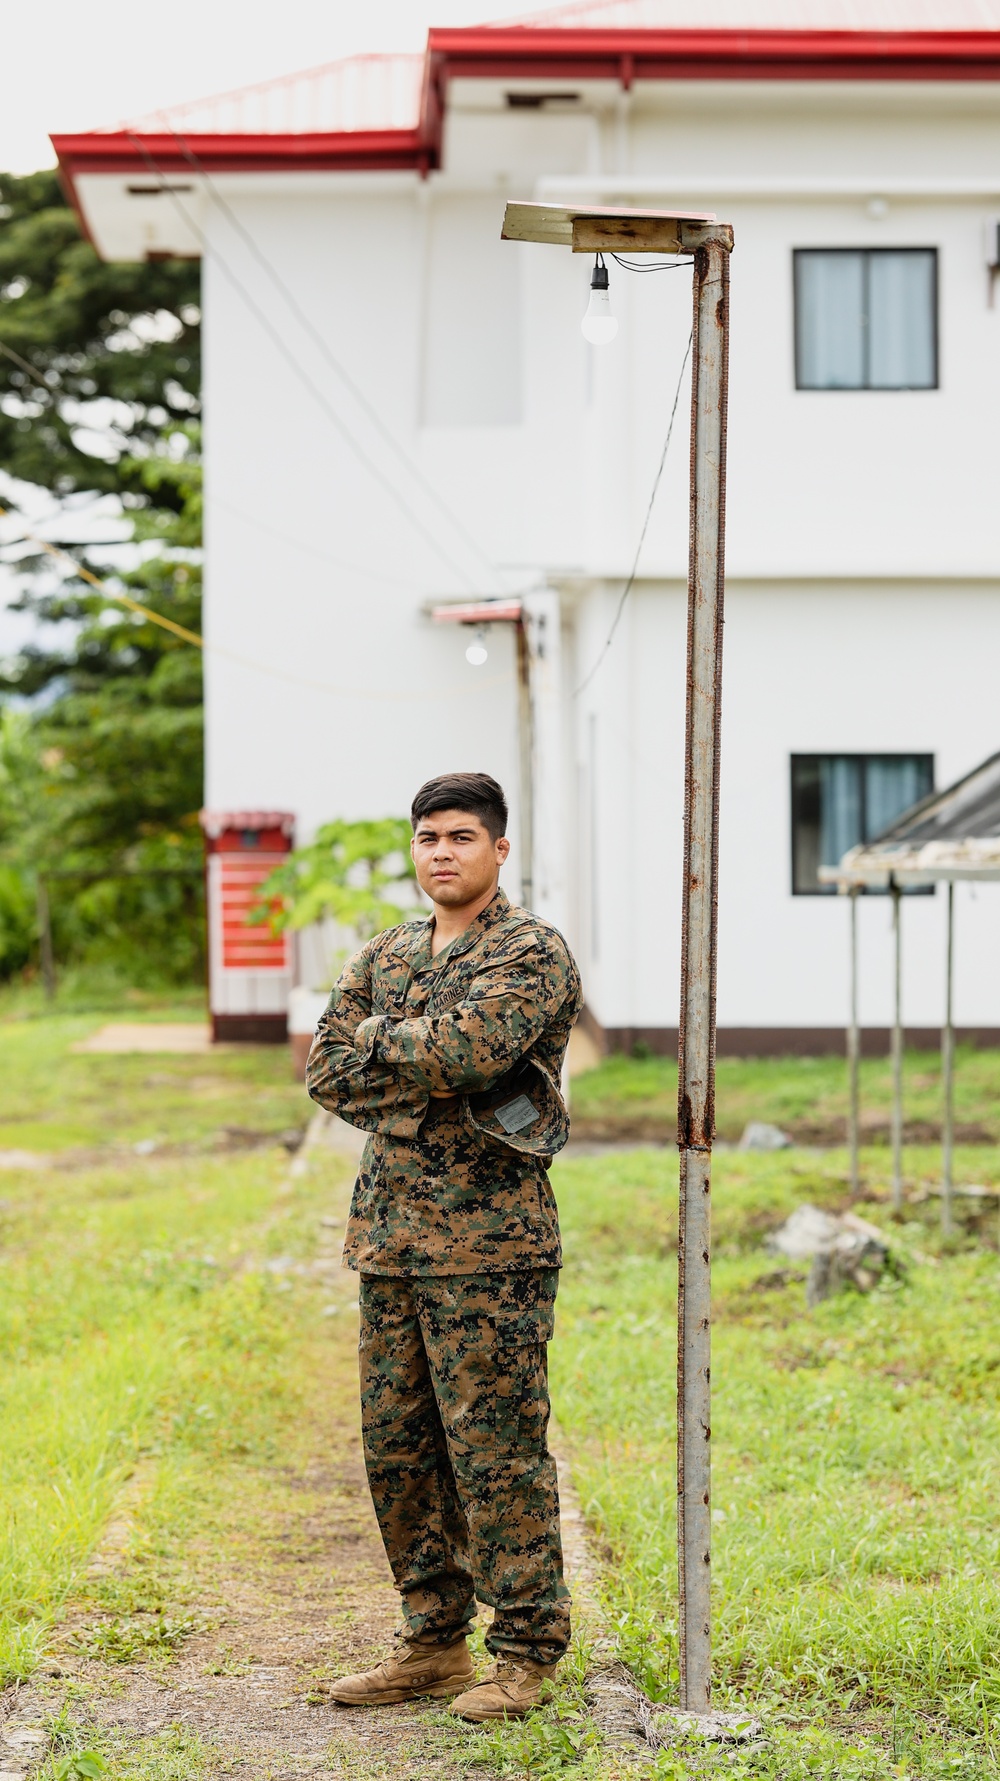 Faces of the MEU: Sgt. Anthony Ayala